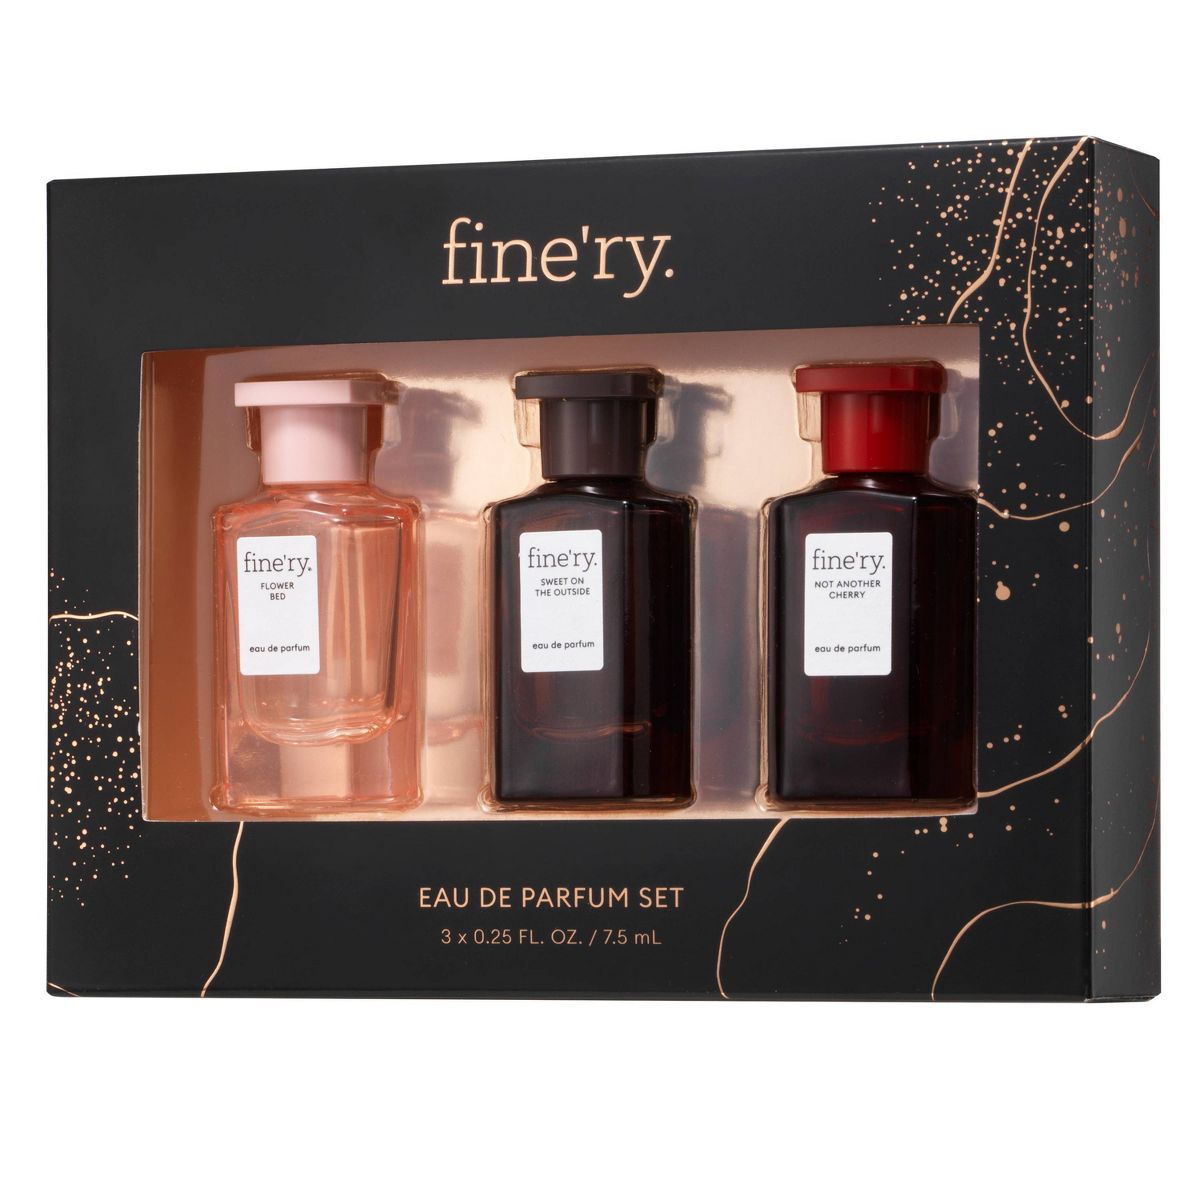 fine'ry. Mini EDP Perfume Gift Set - 0.75 fl oz/3pc | Target